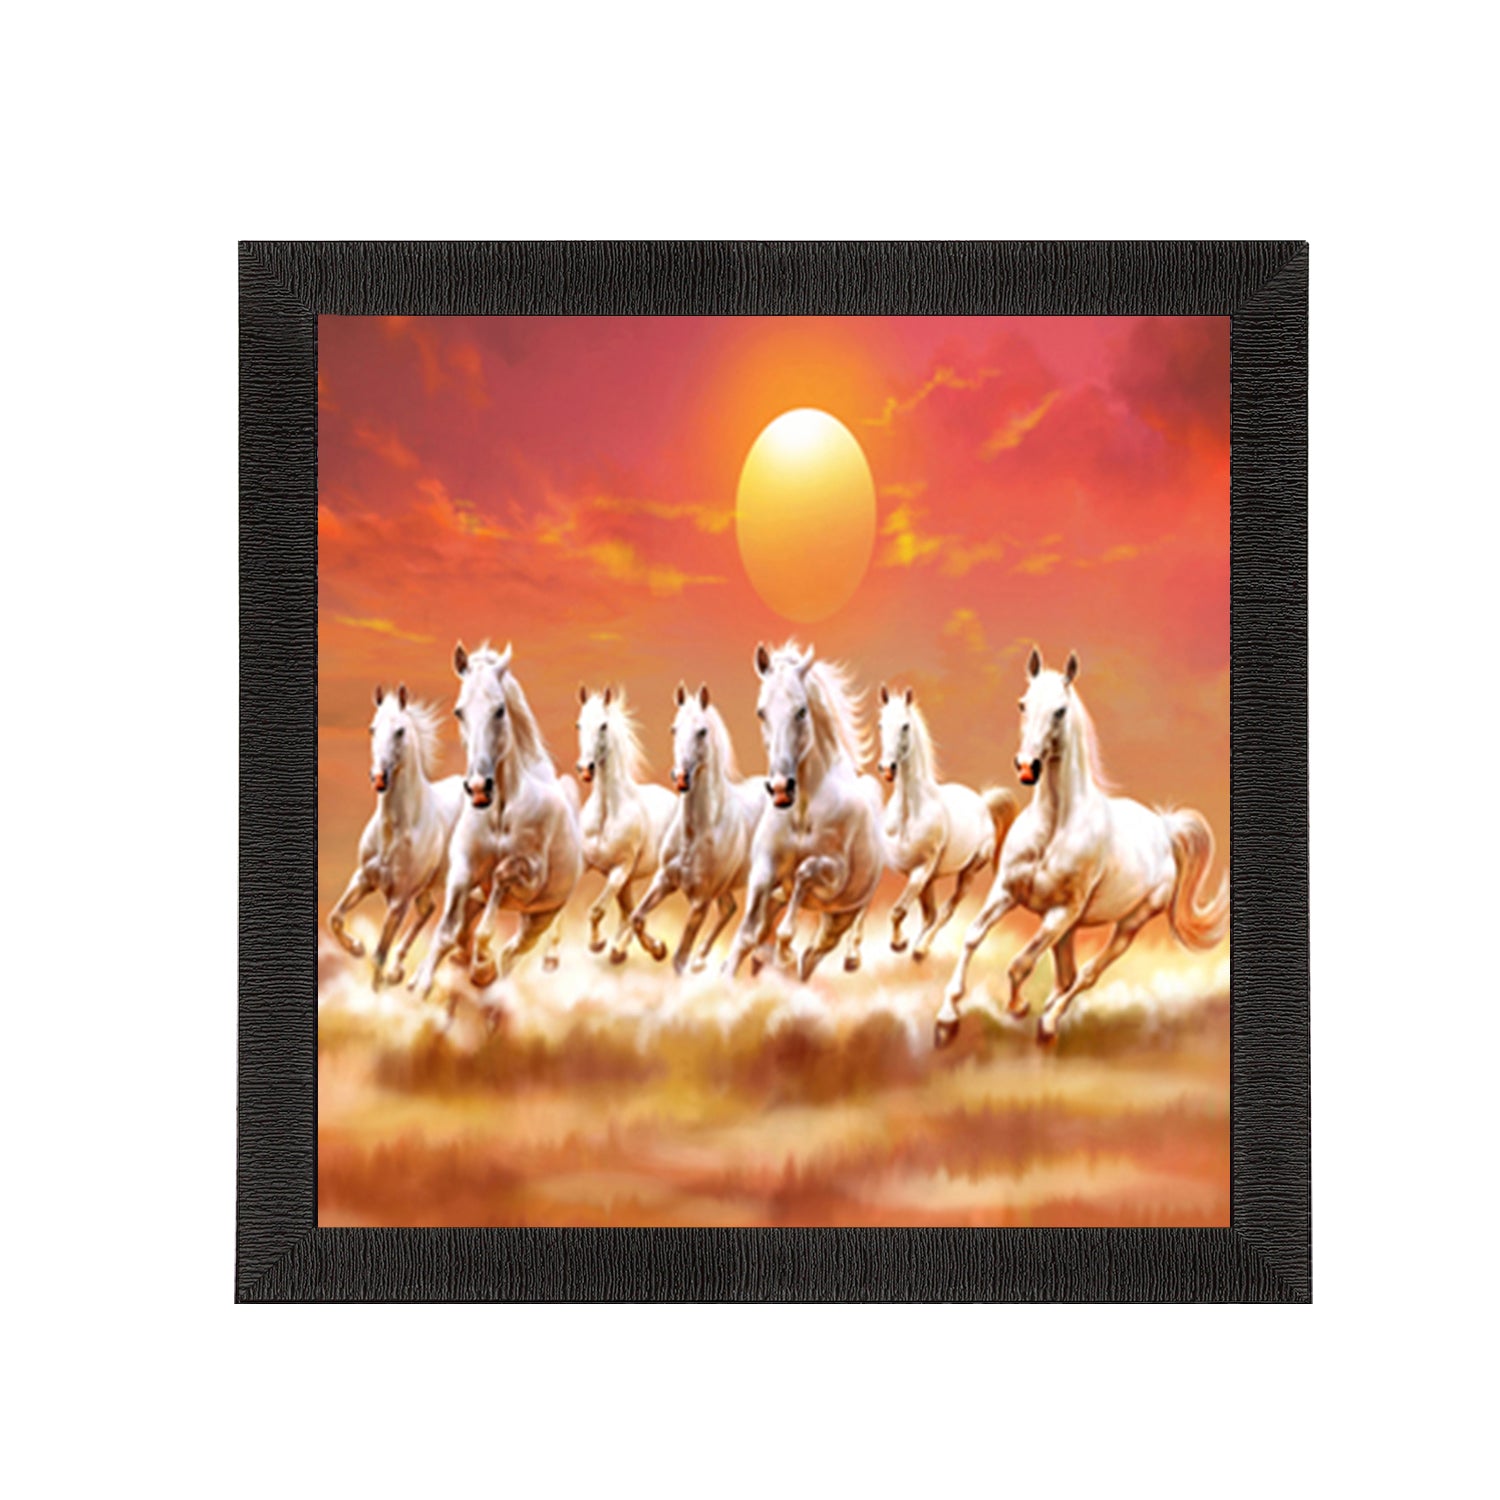 Seven White Running Horses Painting Digital Printed Animal Wall Art